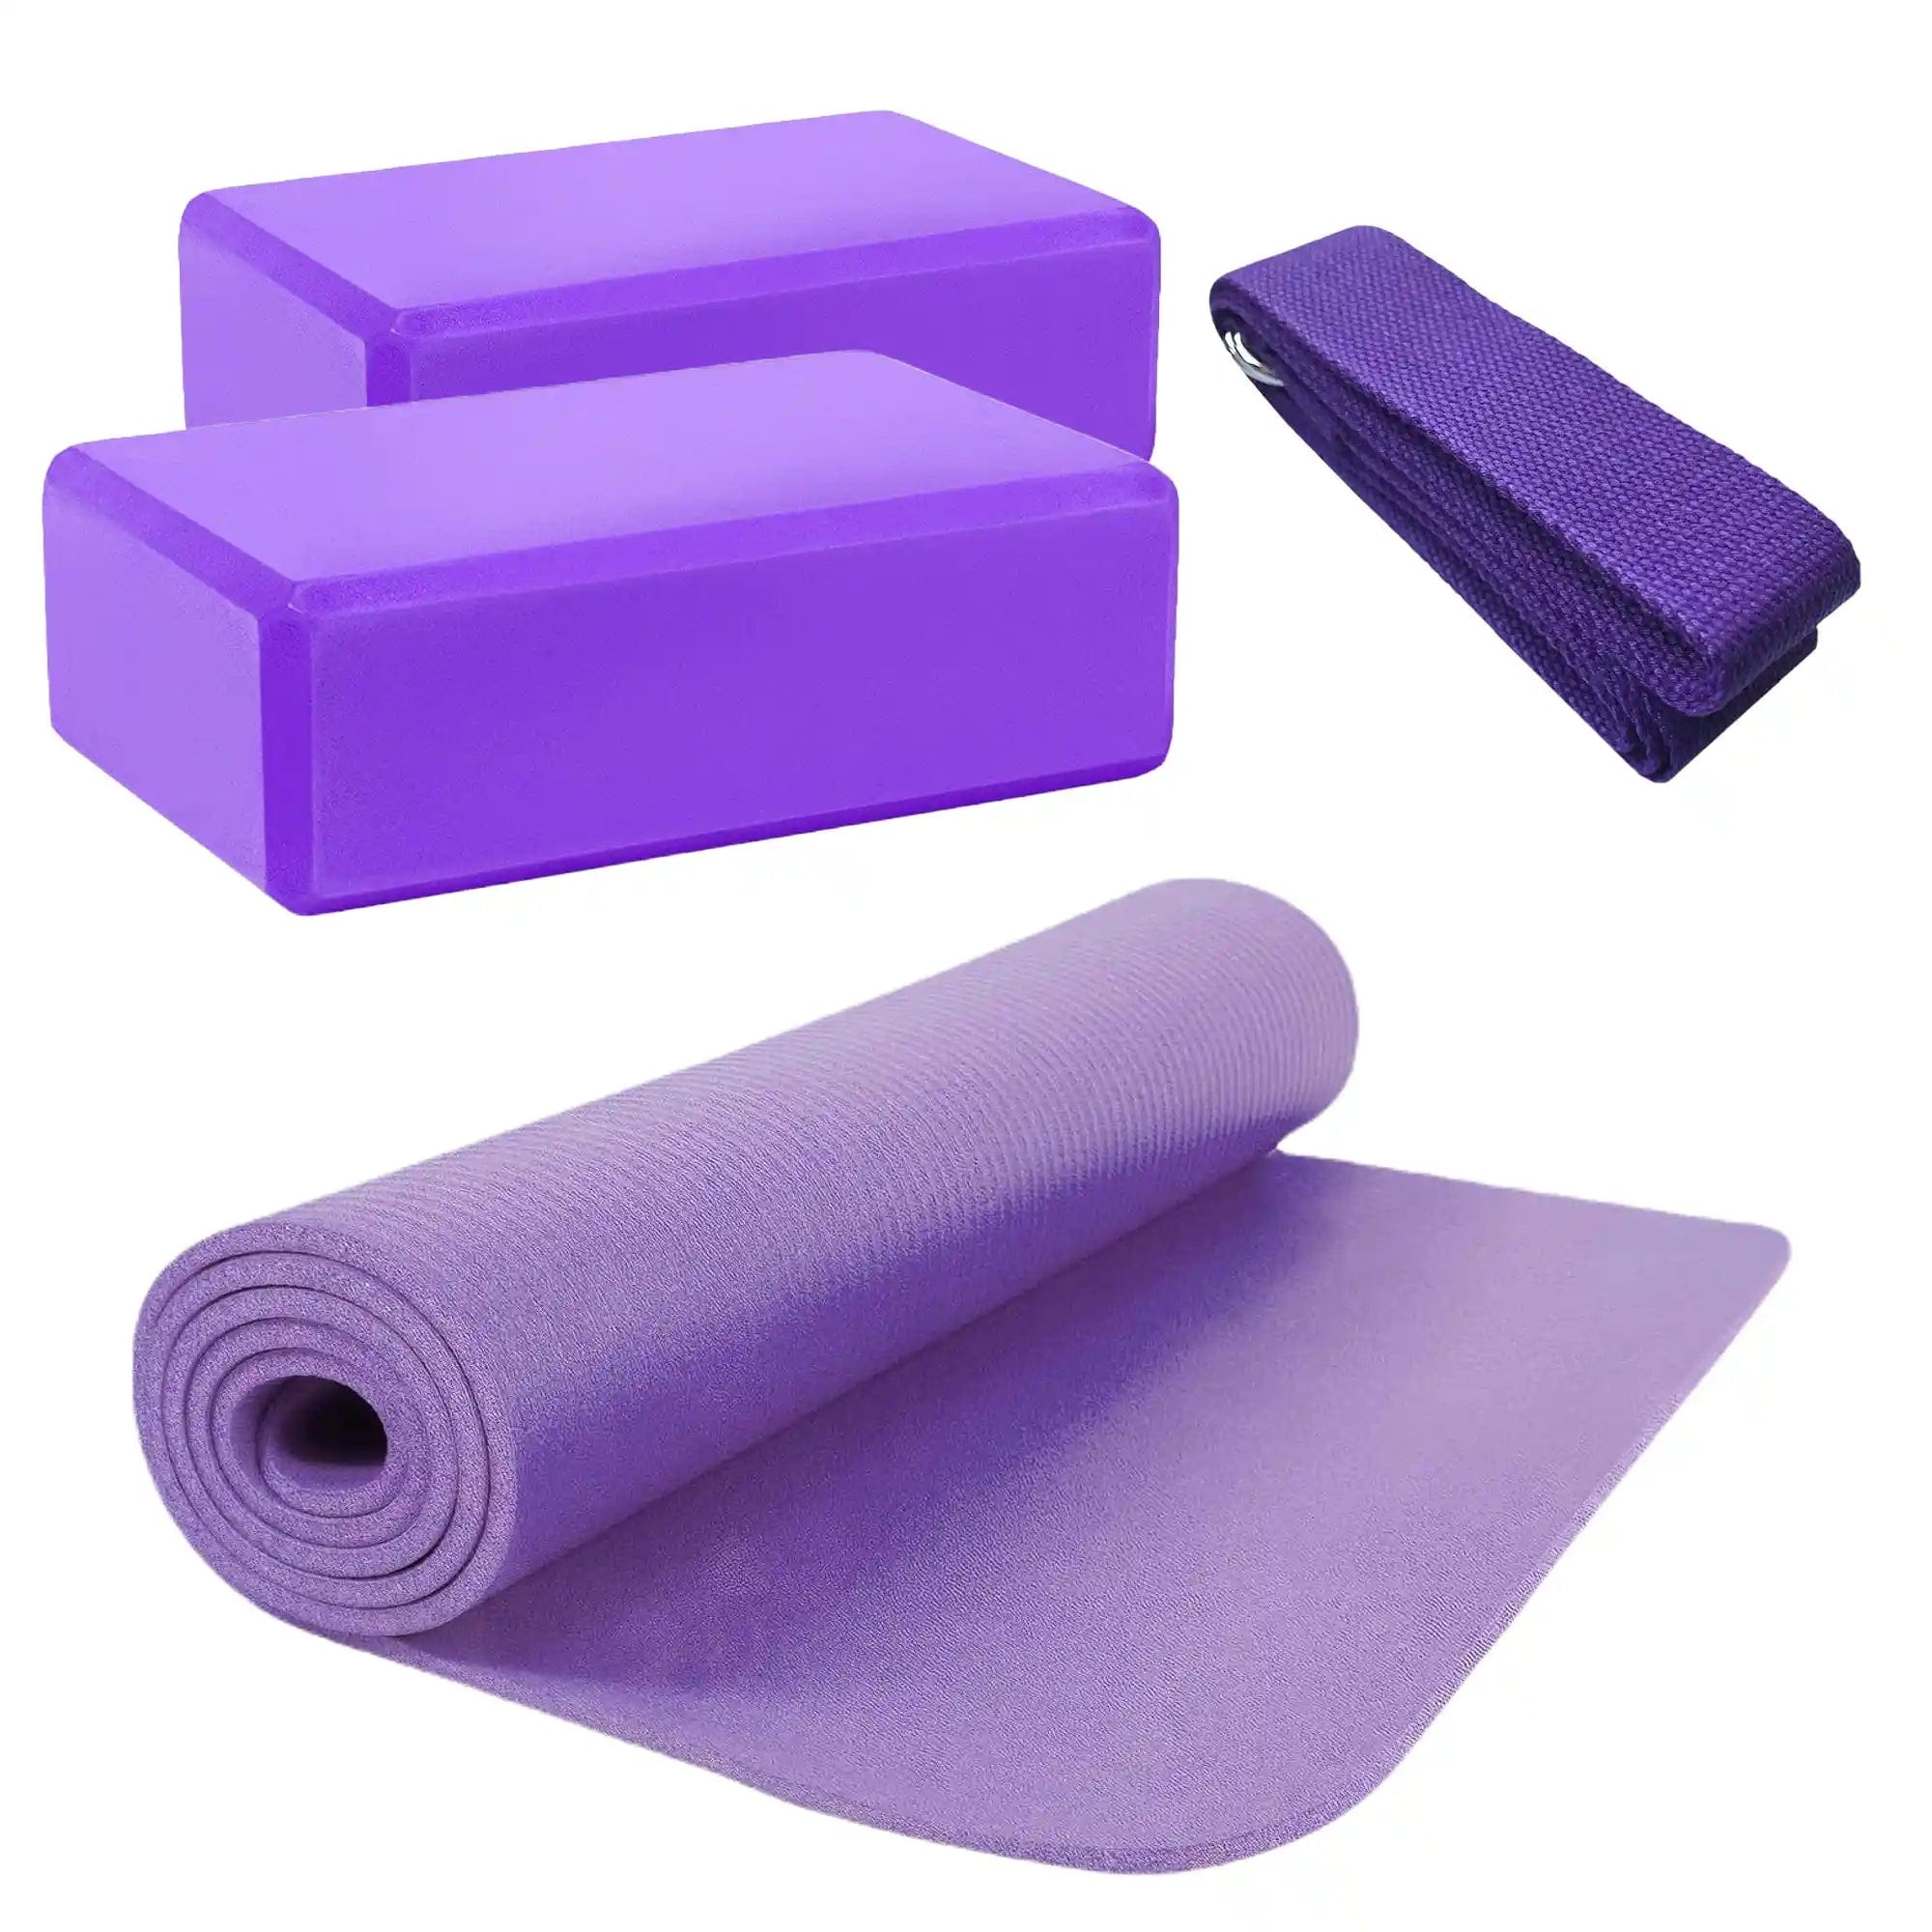 HighPowered Yoga Set (1x Yogamatte, 2x Block, 1x Strap) Violett kaufen bei HighPowered.ch